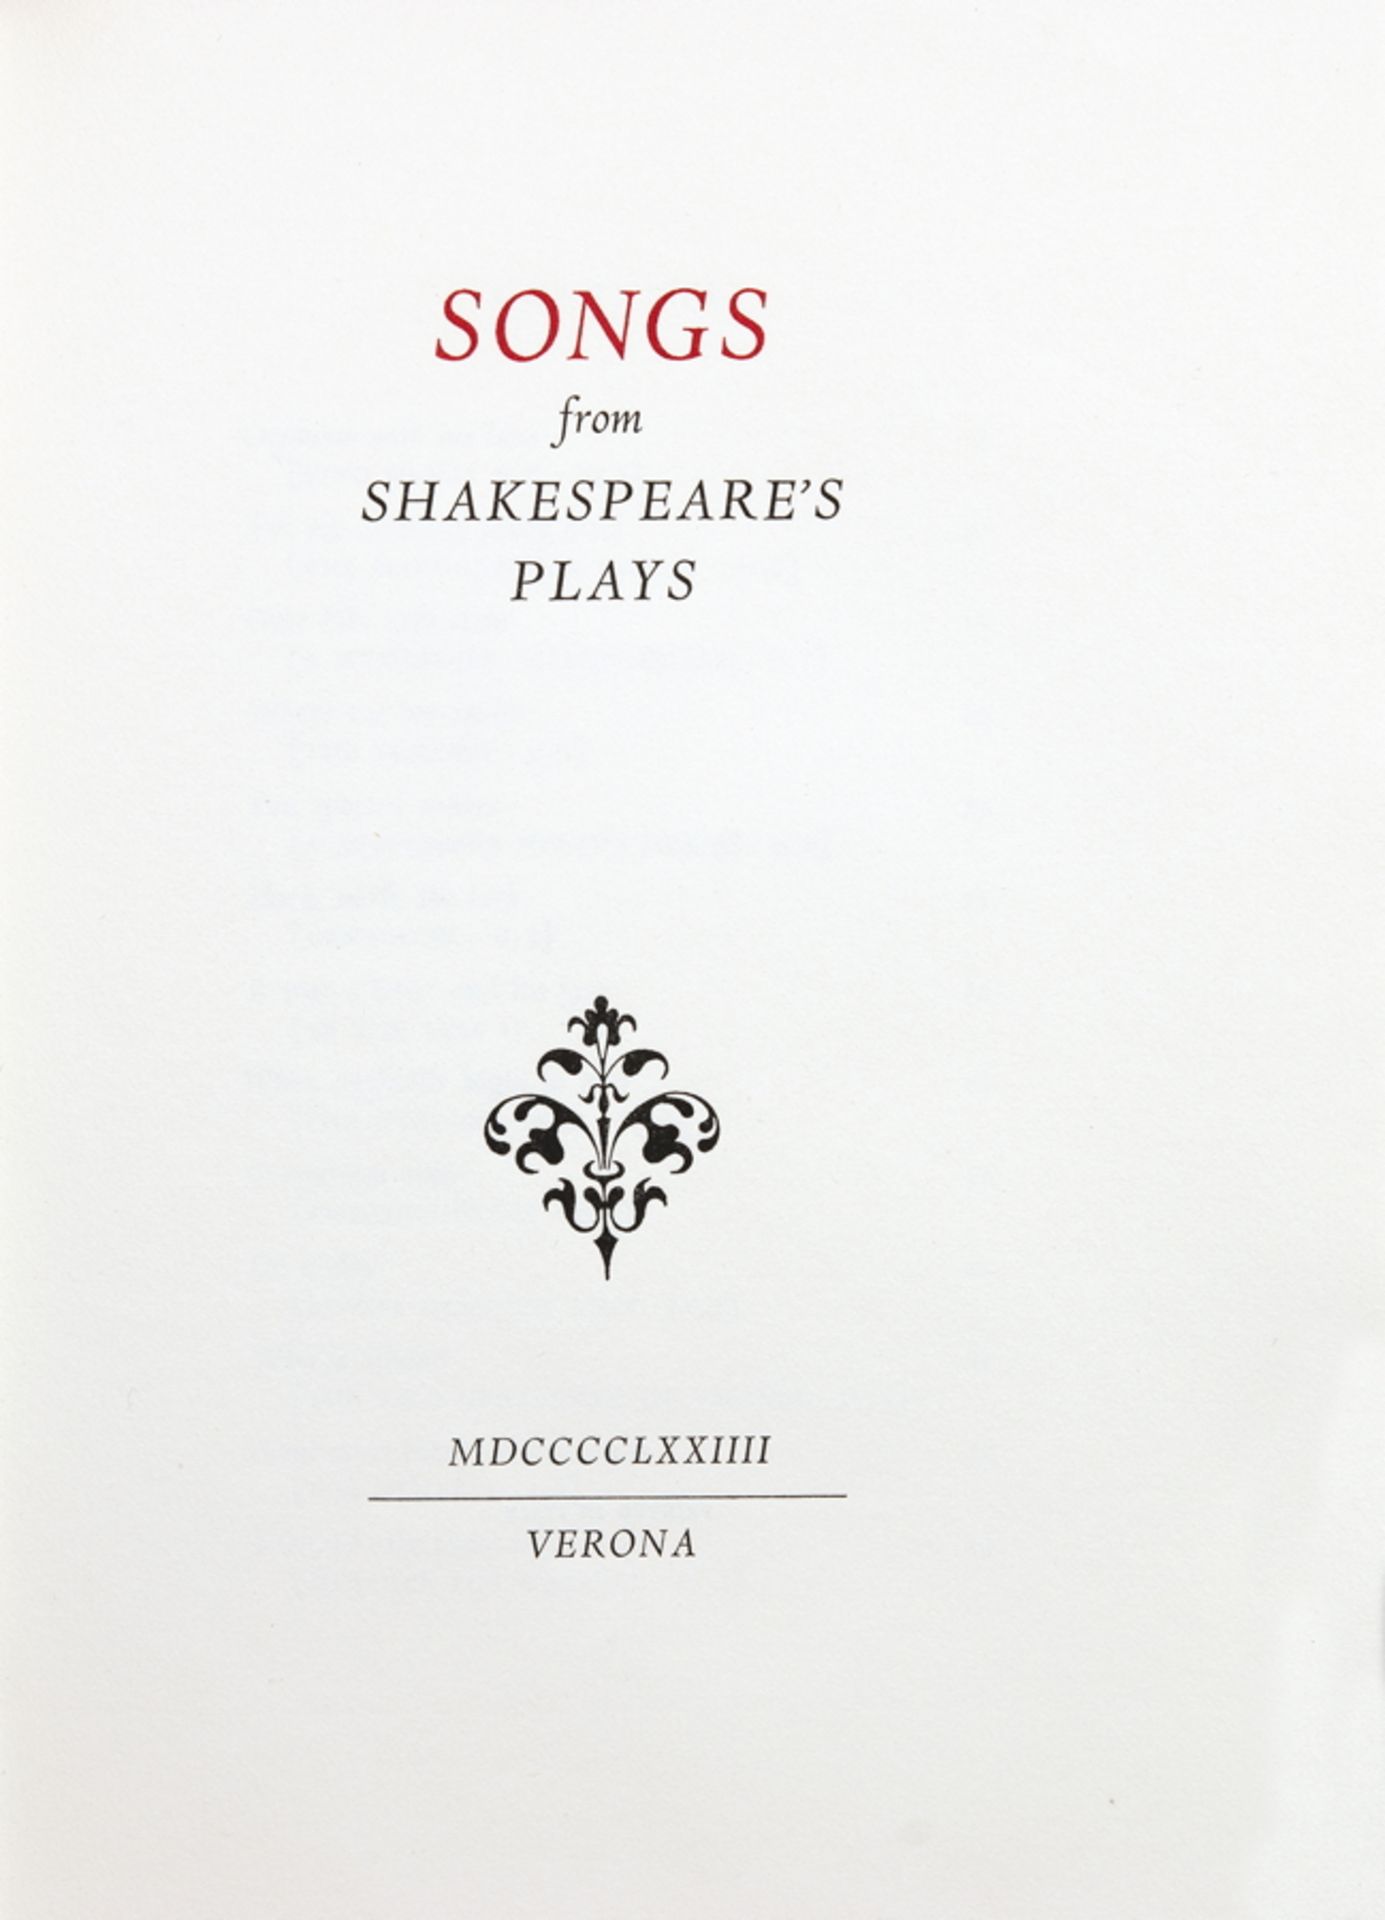 Officina Bodoni - Songs from Shakespeare's Plays. Verona 1974. Grüner Originalhalbmaroquinband mit